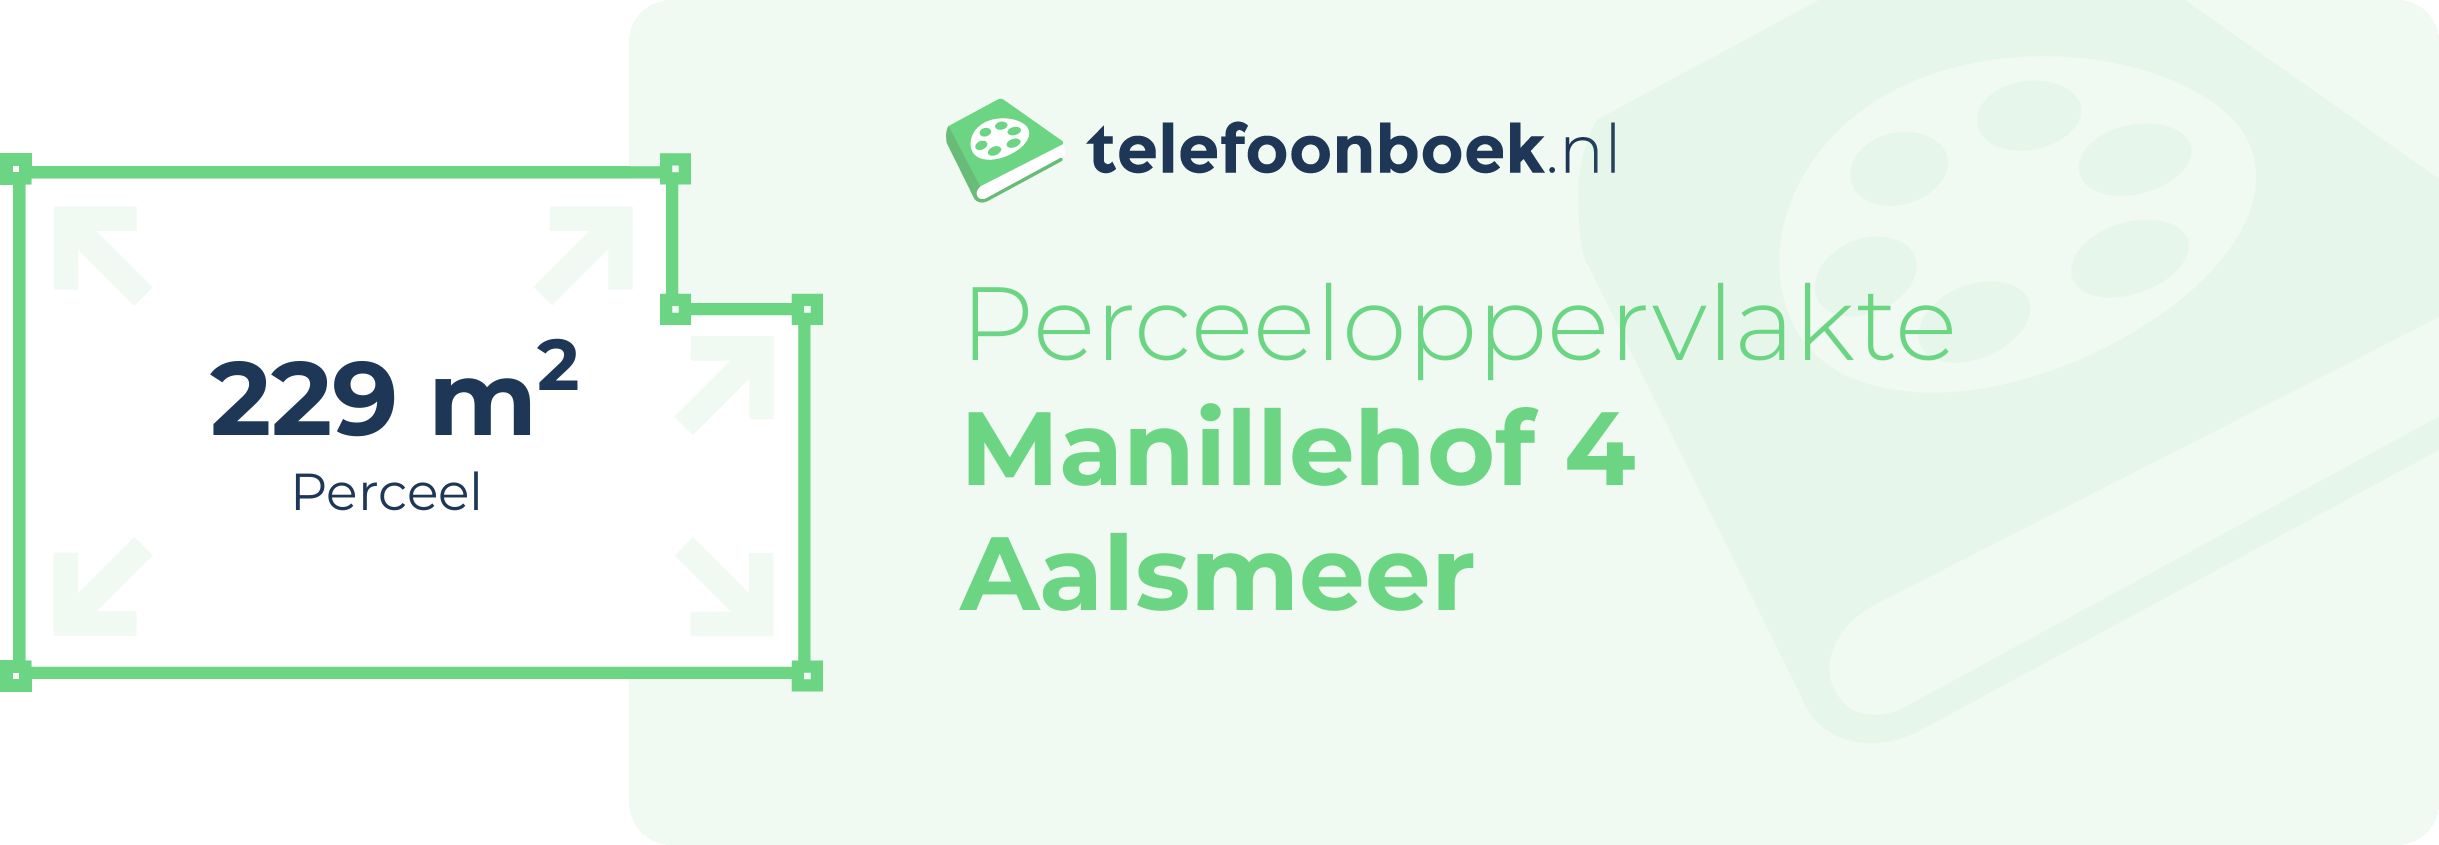 Perceeloppervlakte Manillehof 4 Aalsmeer